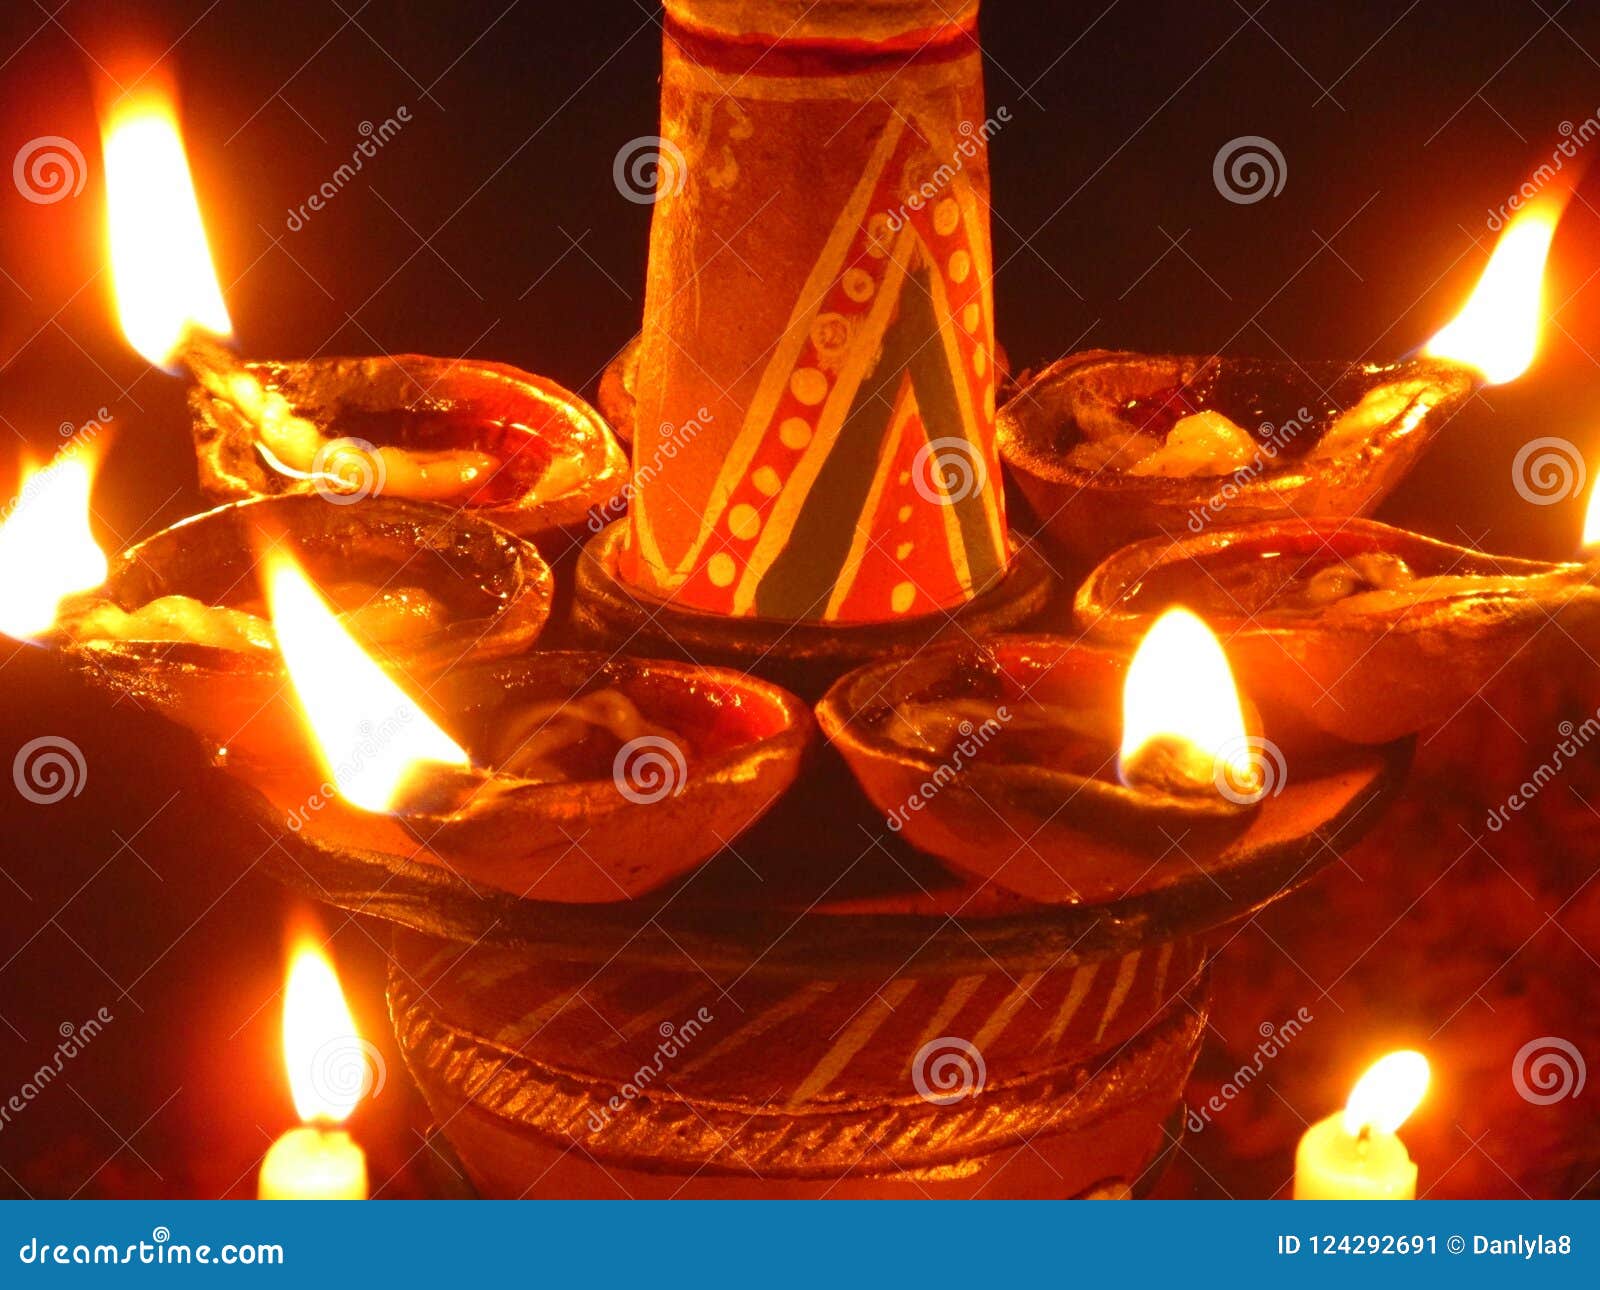 Lamp for Diwali - Deepavali Stock Image - Image of flame, warm: 124292691